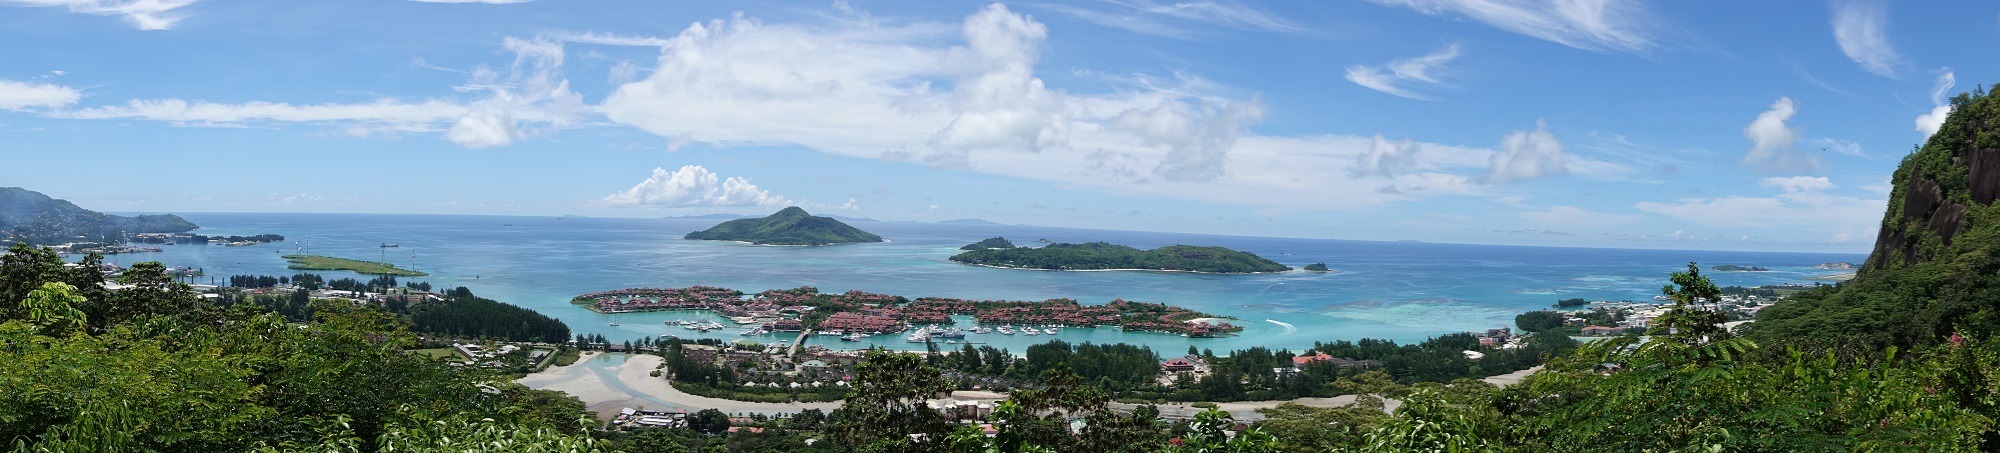 Seychelles Panoramics - Vision Voyages DMC Pty Ltd